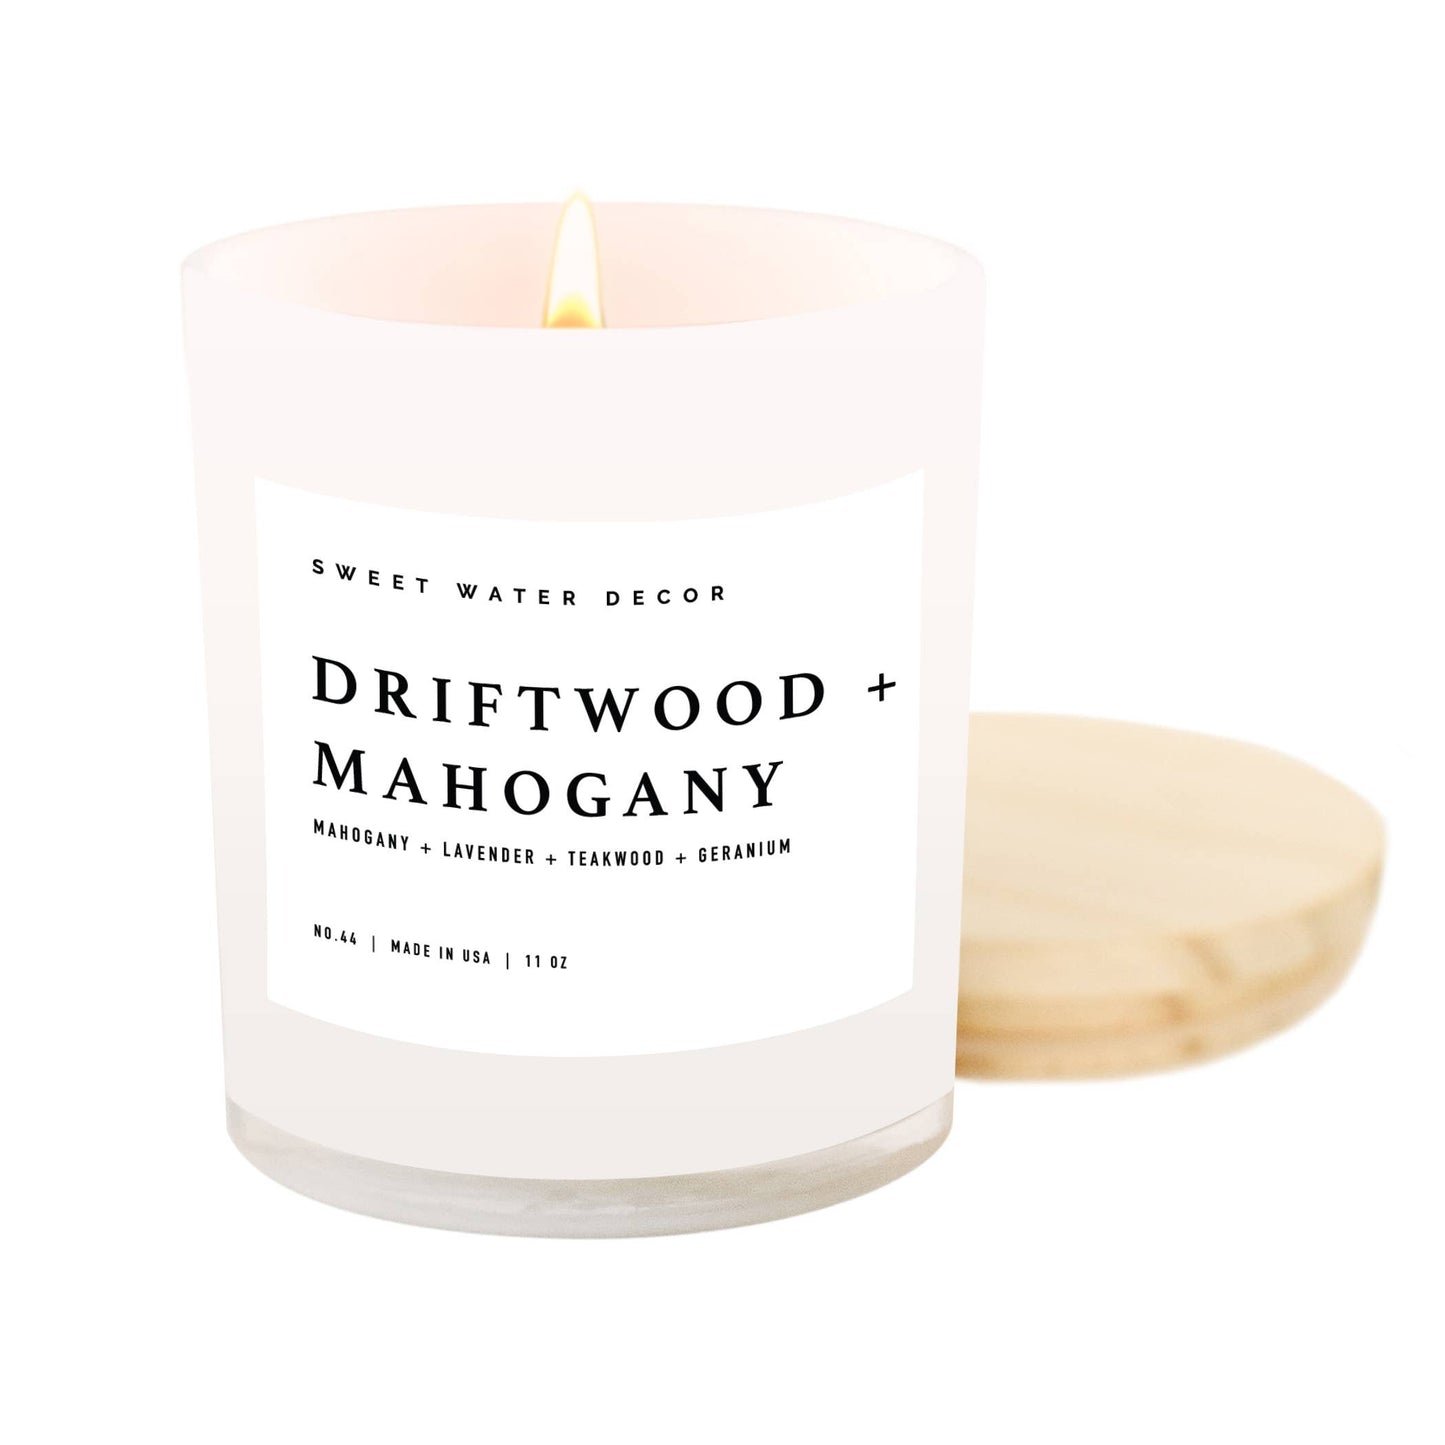 Driftwood and Mahogany 11 oz Soy Candle